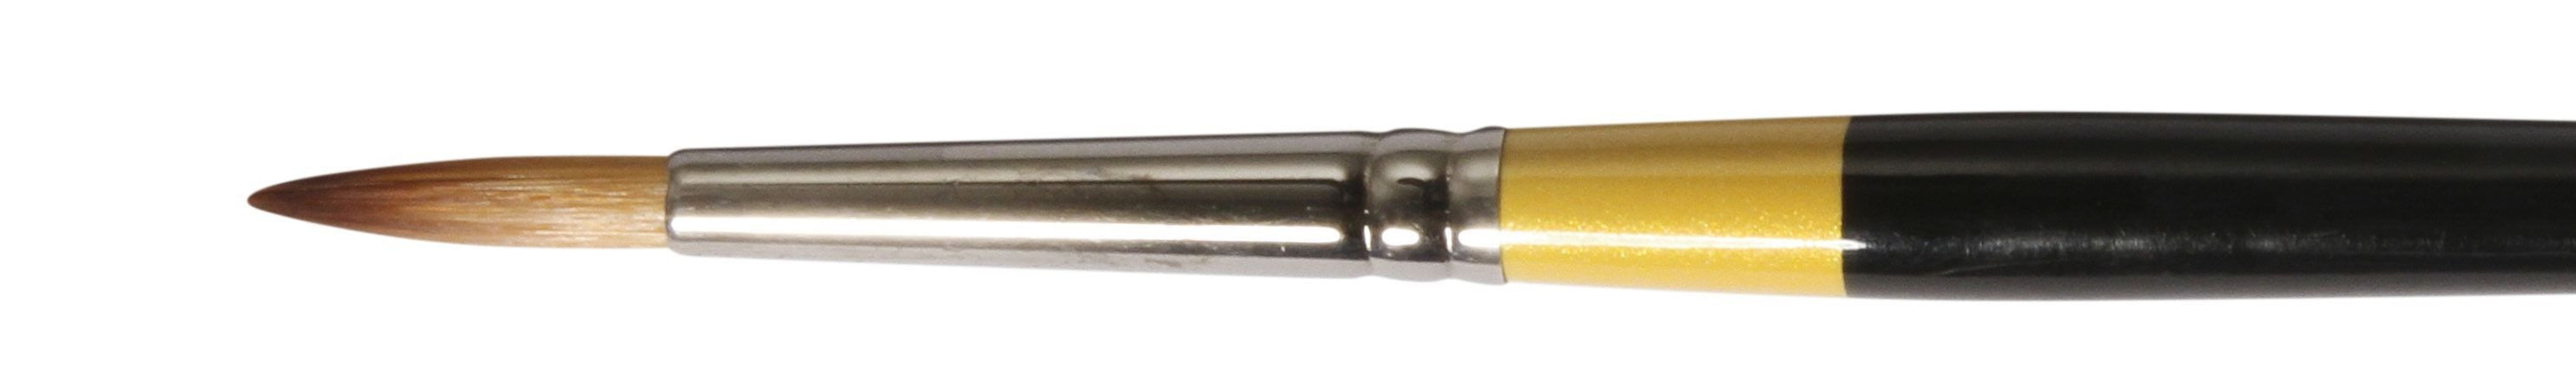 Daler Rowney System 3 Short Handle Brush Round  SY85 Size 6 Shape: Round Hair Width: 4.2 mm Hair Length: 21 mm Handle Length: Short